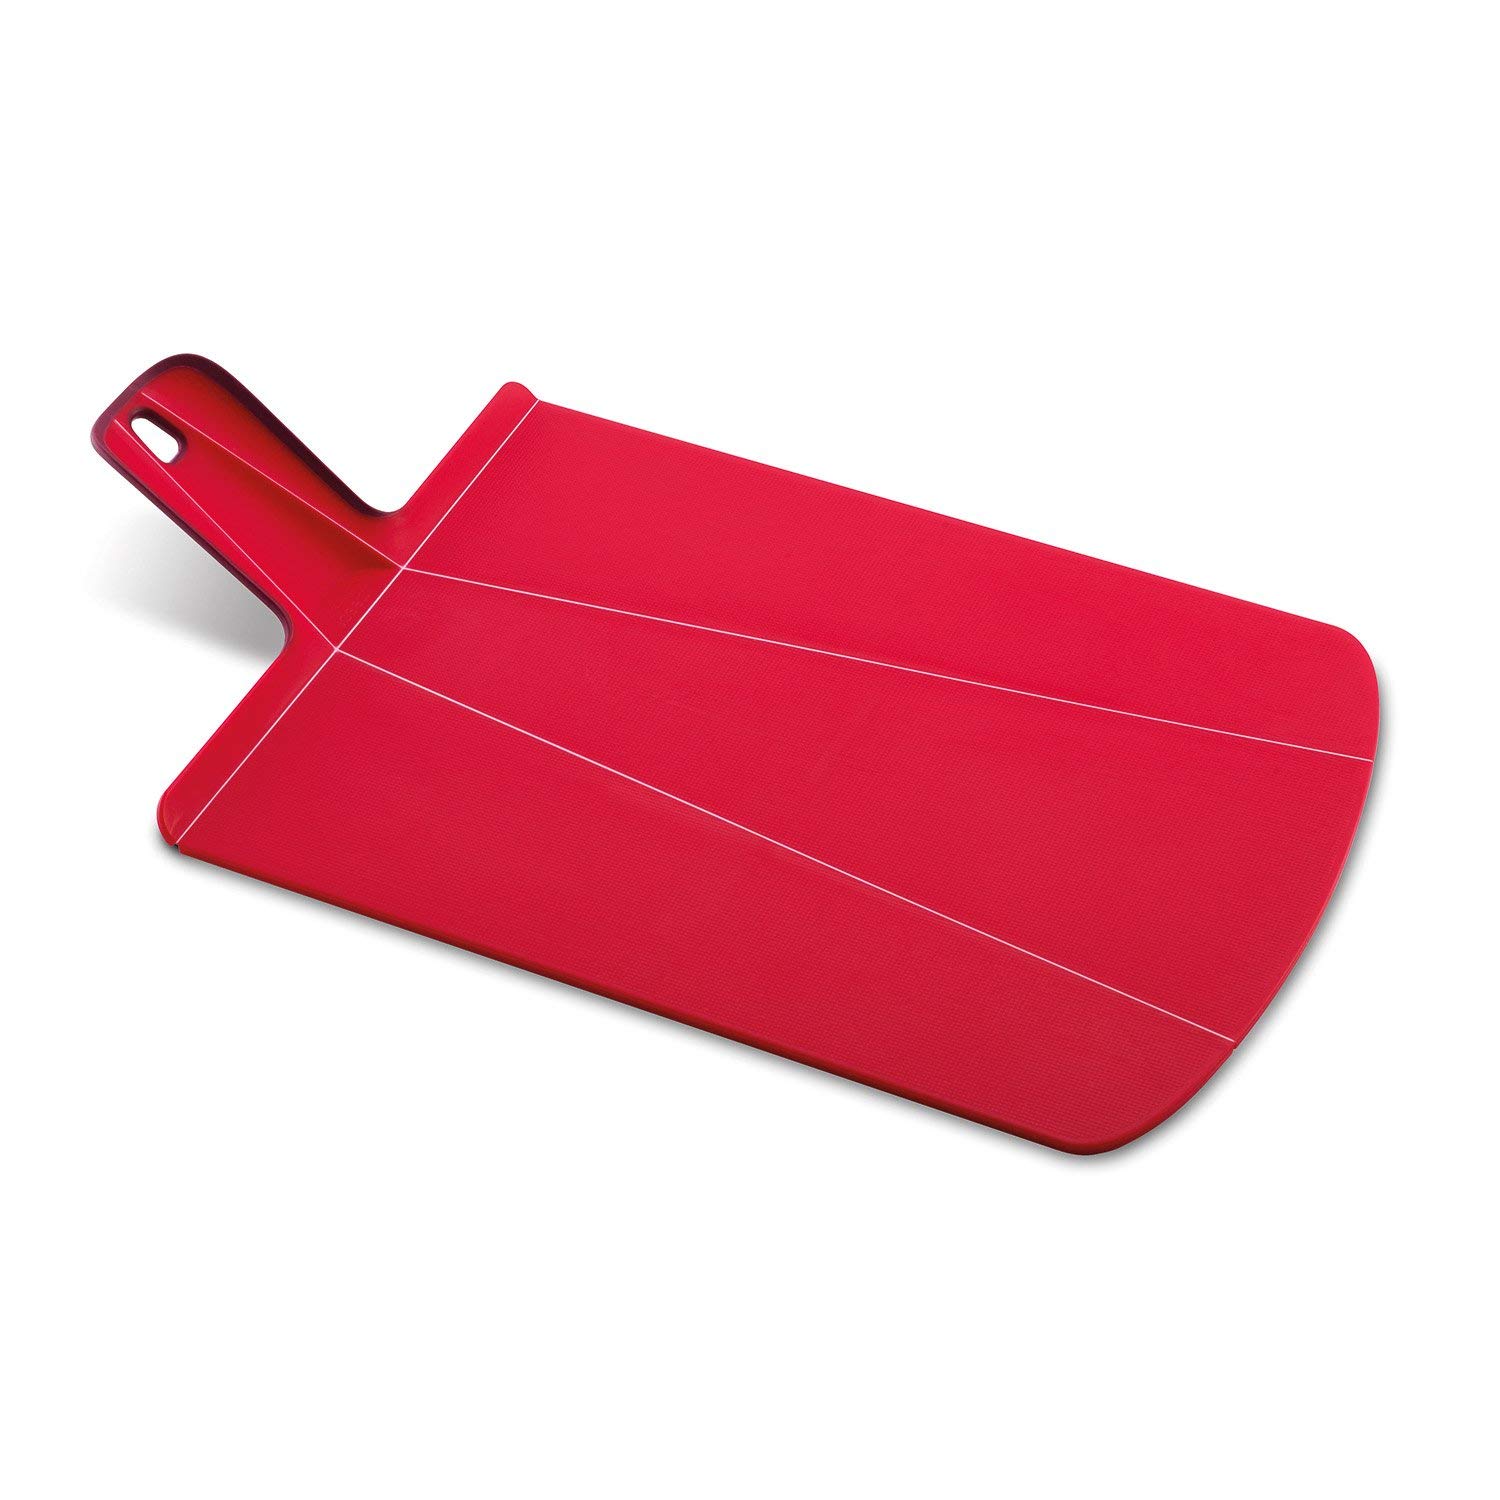 Joseph Joseph Chop2Pot Plus, Folding Chopping Board, Large - Red - image 1 of 2